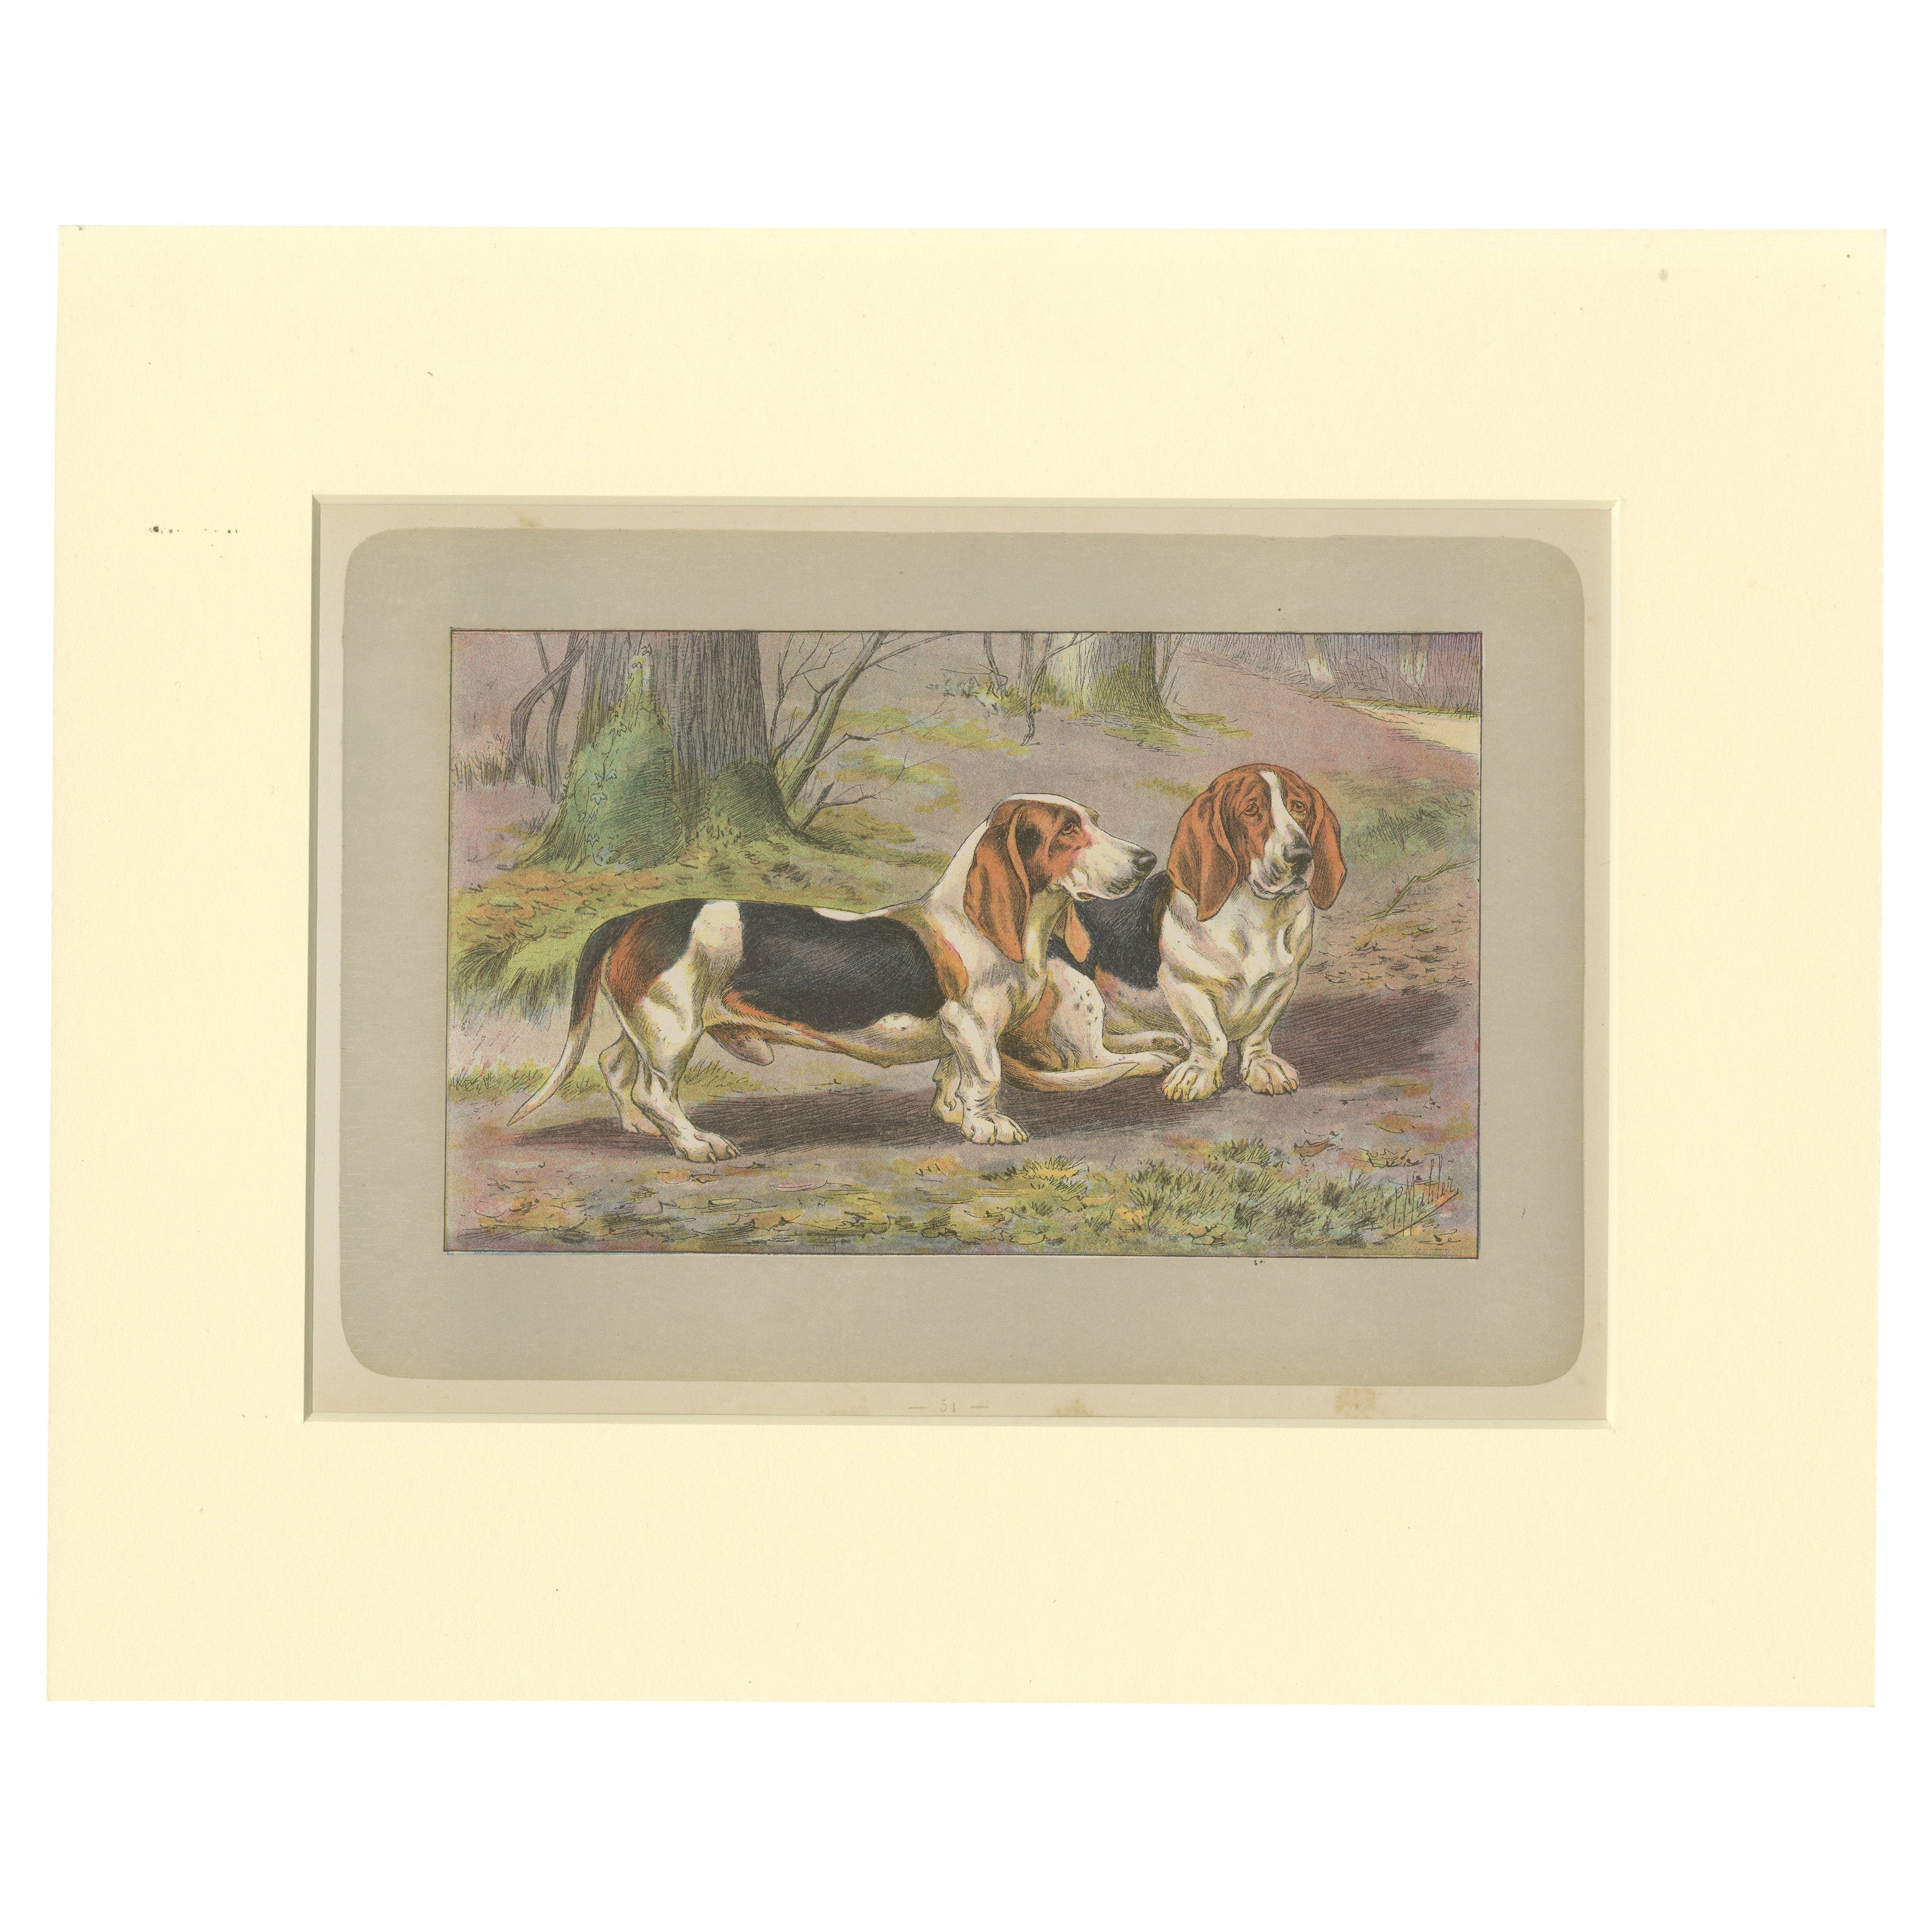 Antique Dog Print of the Basset Hound